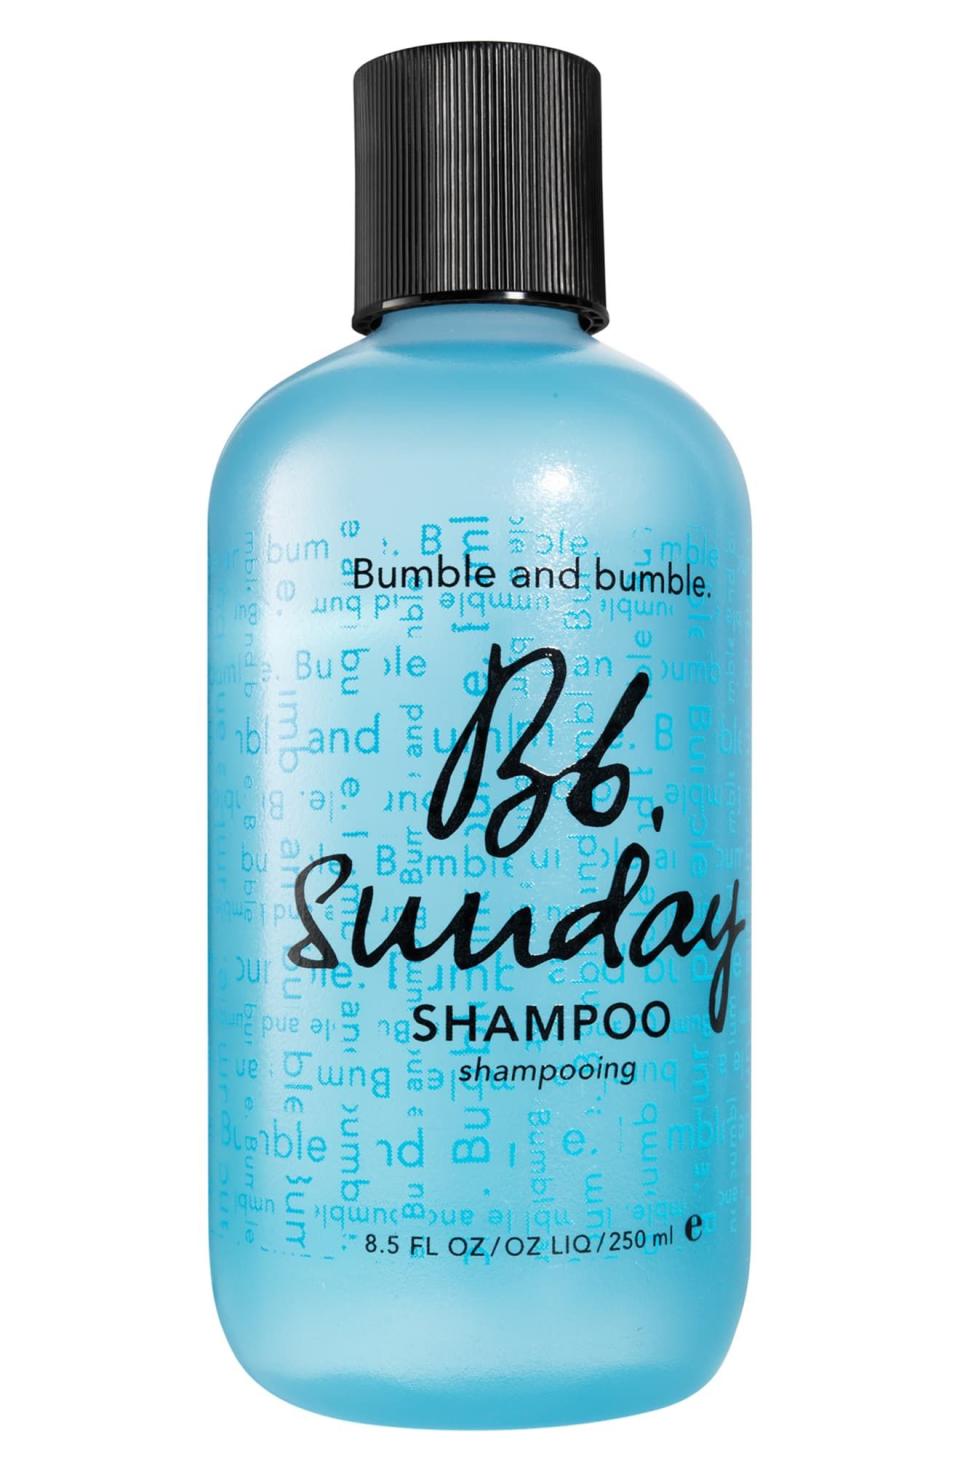 3) Bumble and bumble Sunday Shampoo